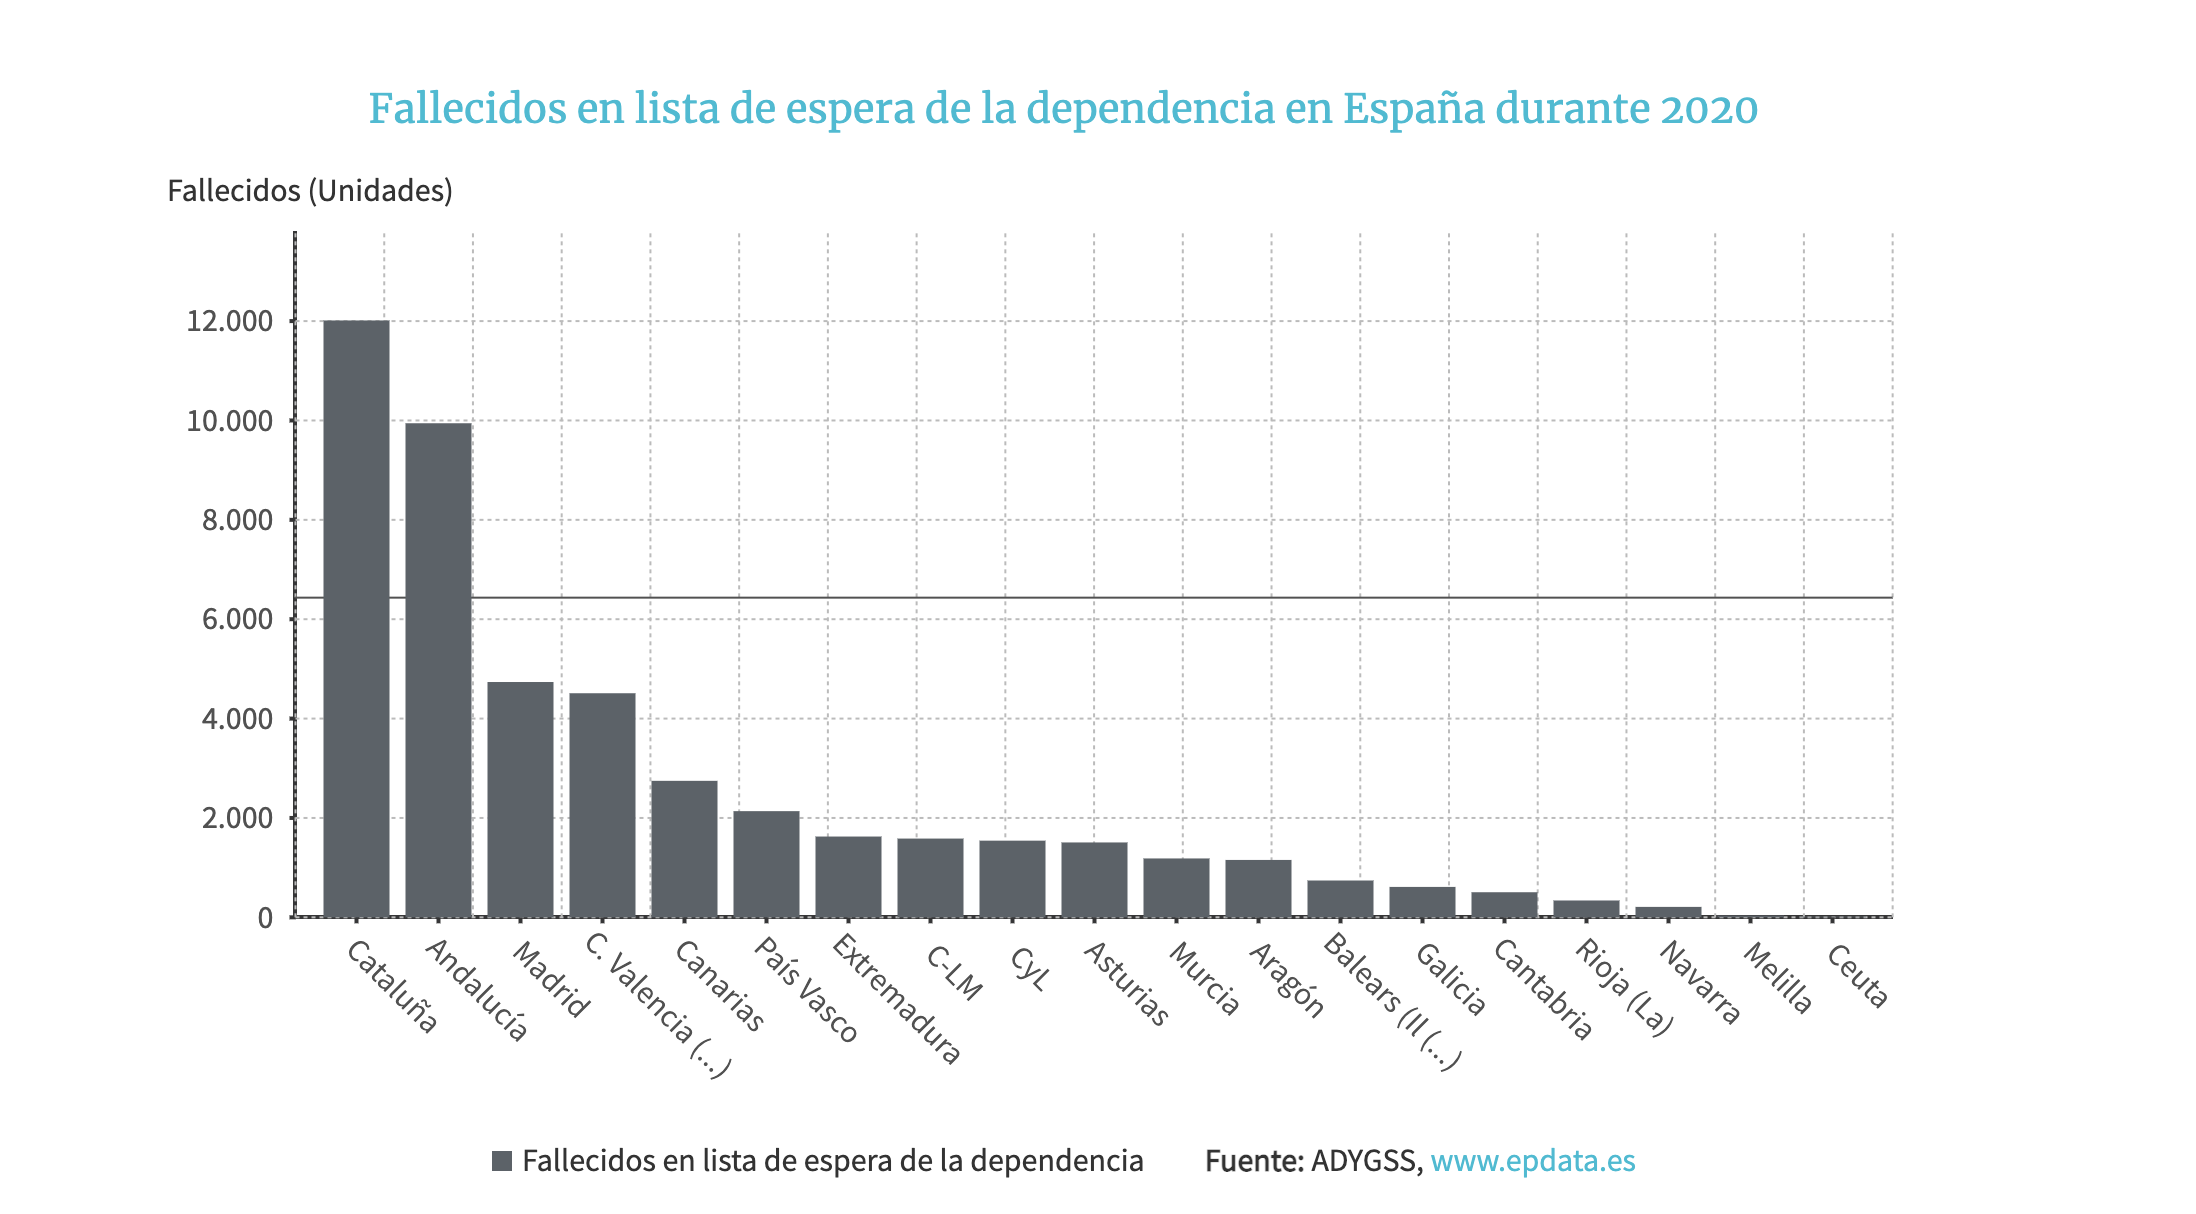 Fallecidos en lista de espera de la dependencia en España durante 20209 (Europa Press)